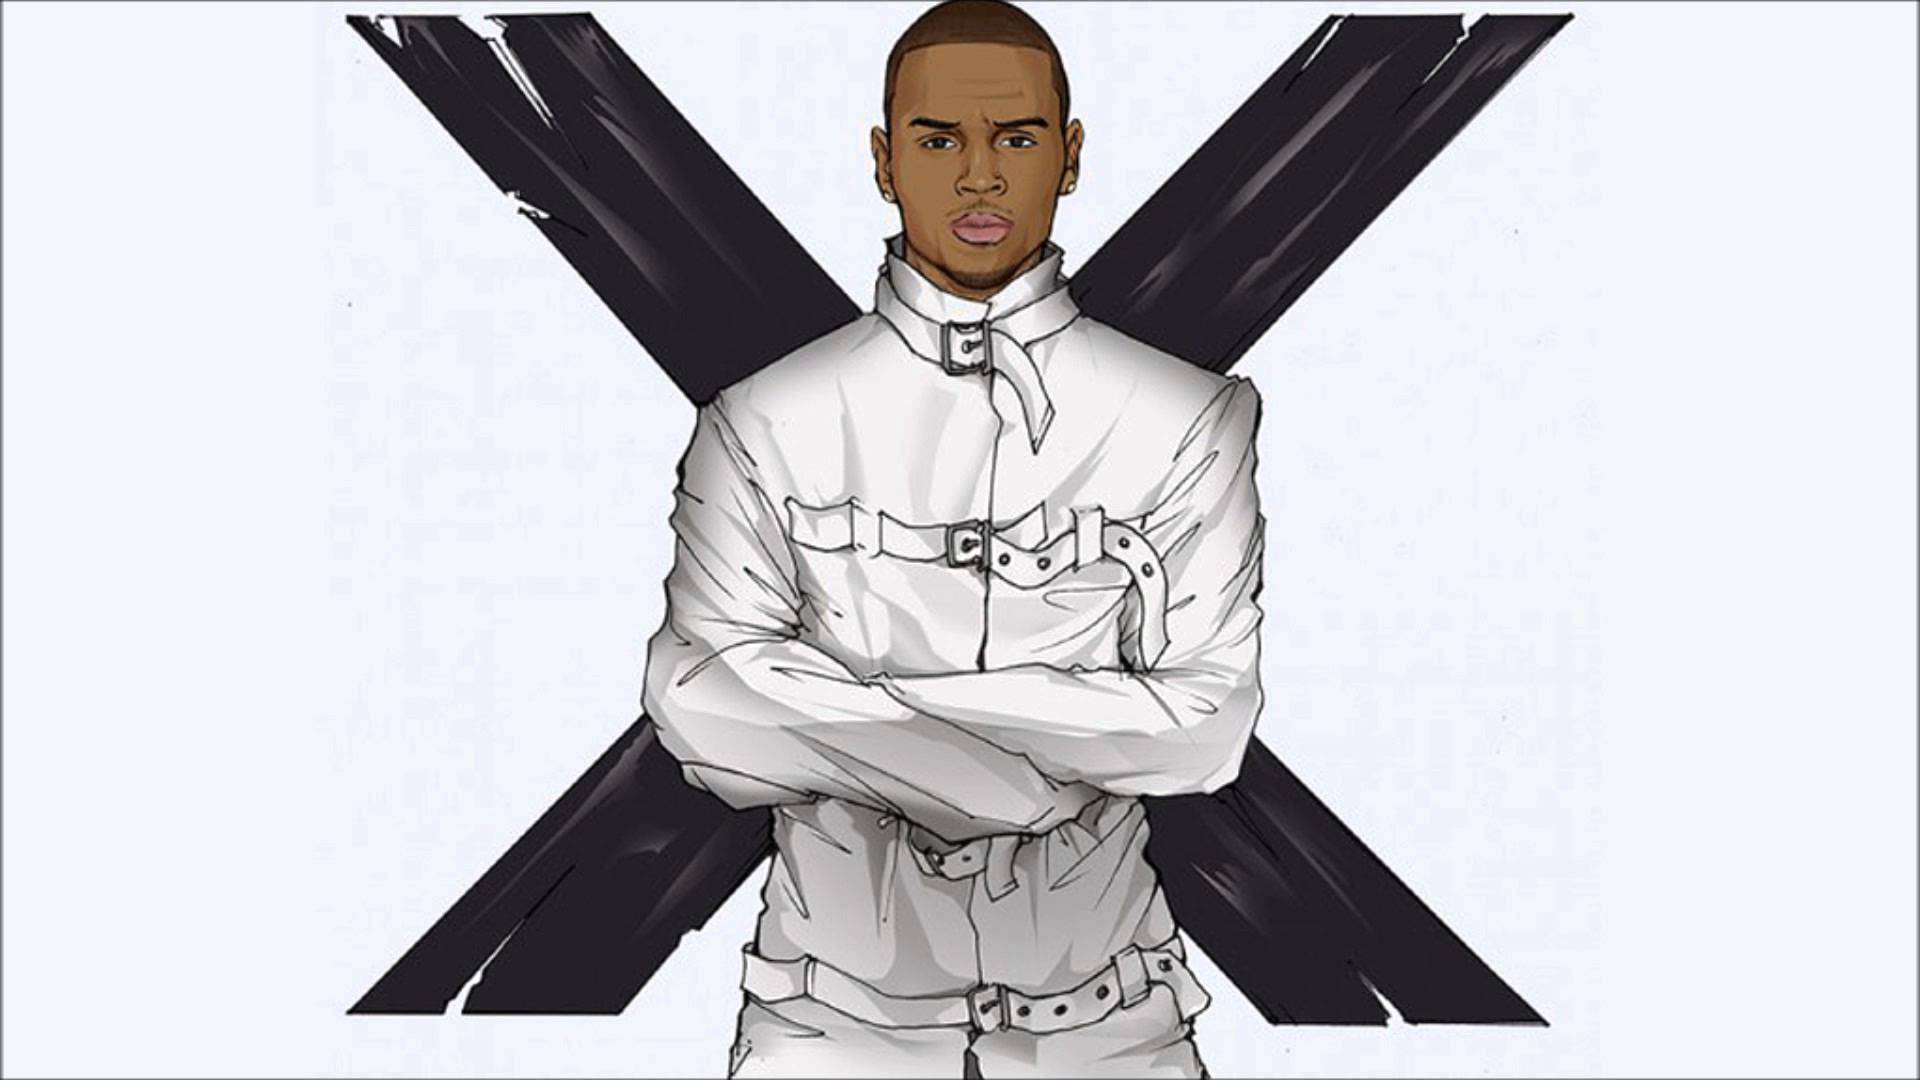 Chris Brown Wallpaper Dancer HD Image X Music Album